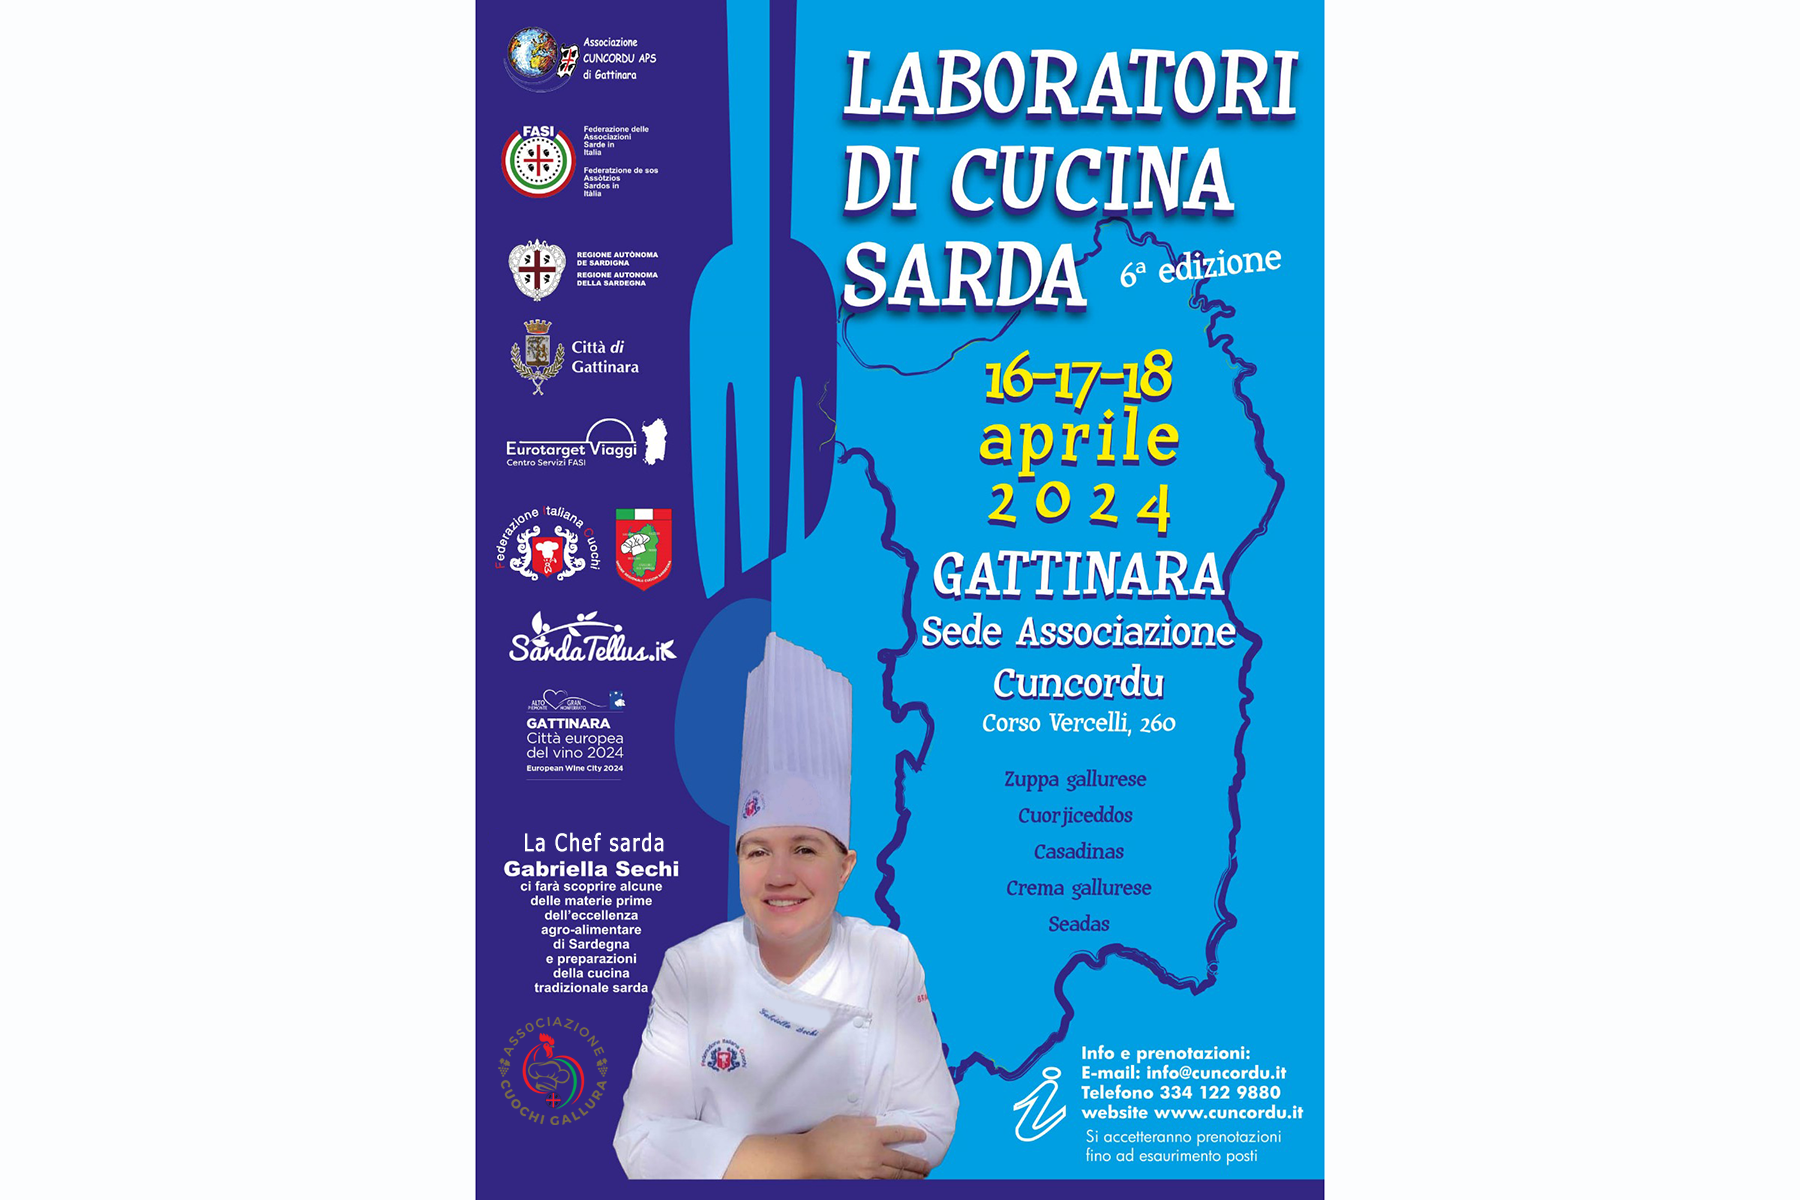 16/18-04-2024 Laboratori di Cucina Sarda - 6a Edizione